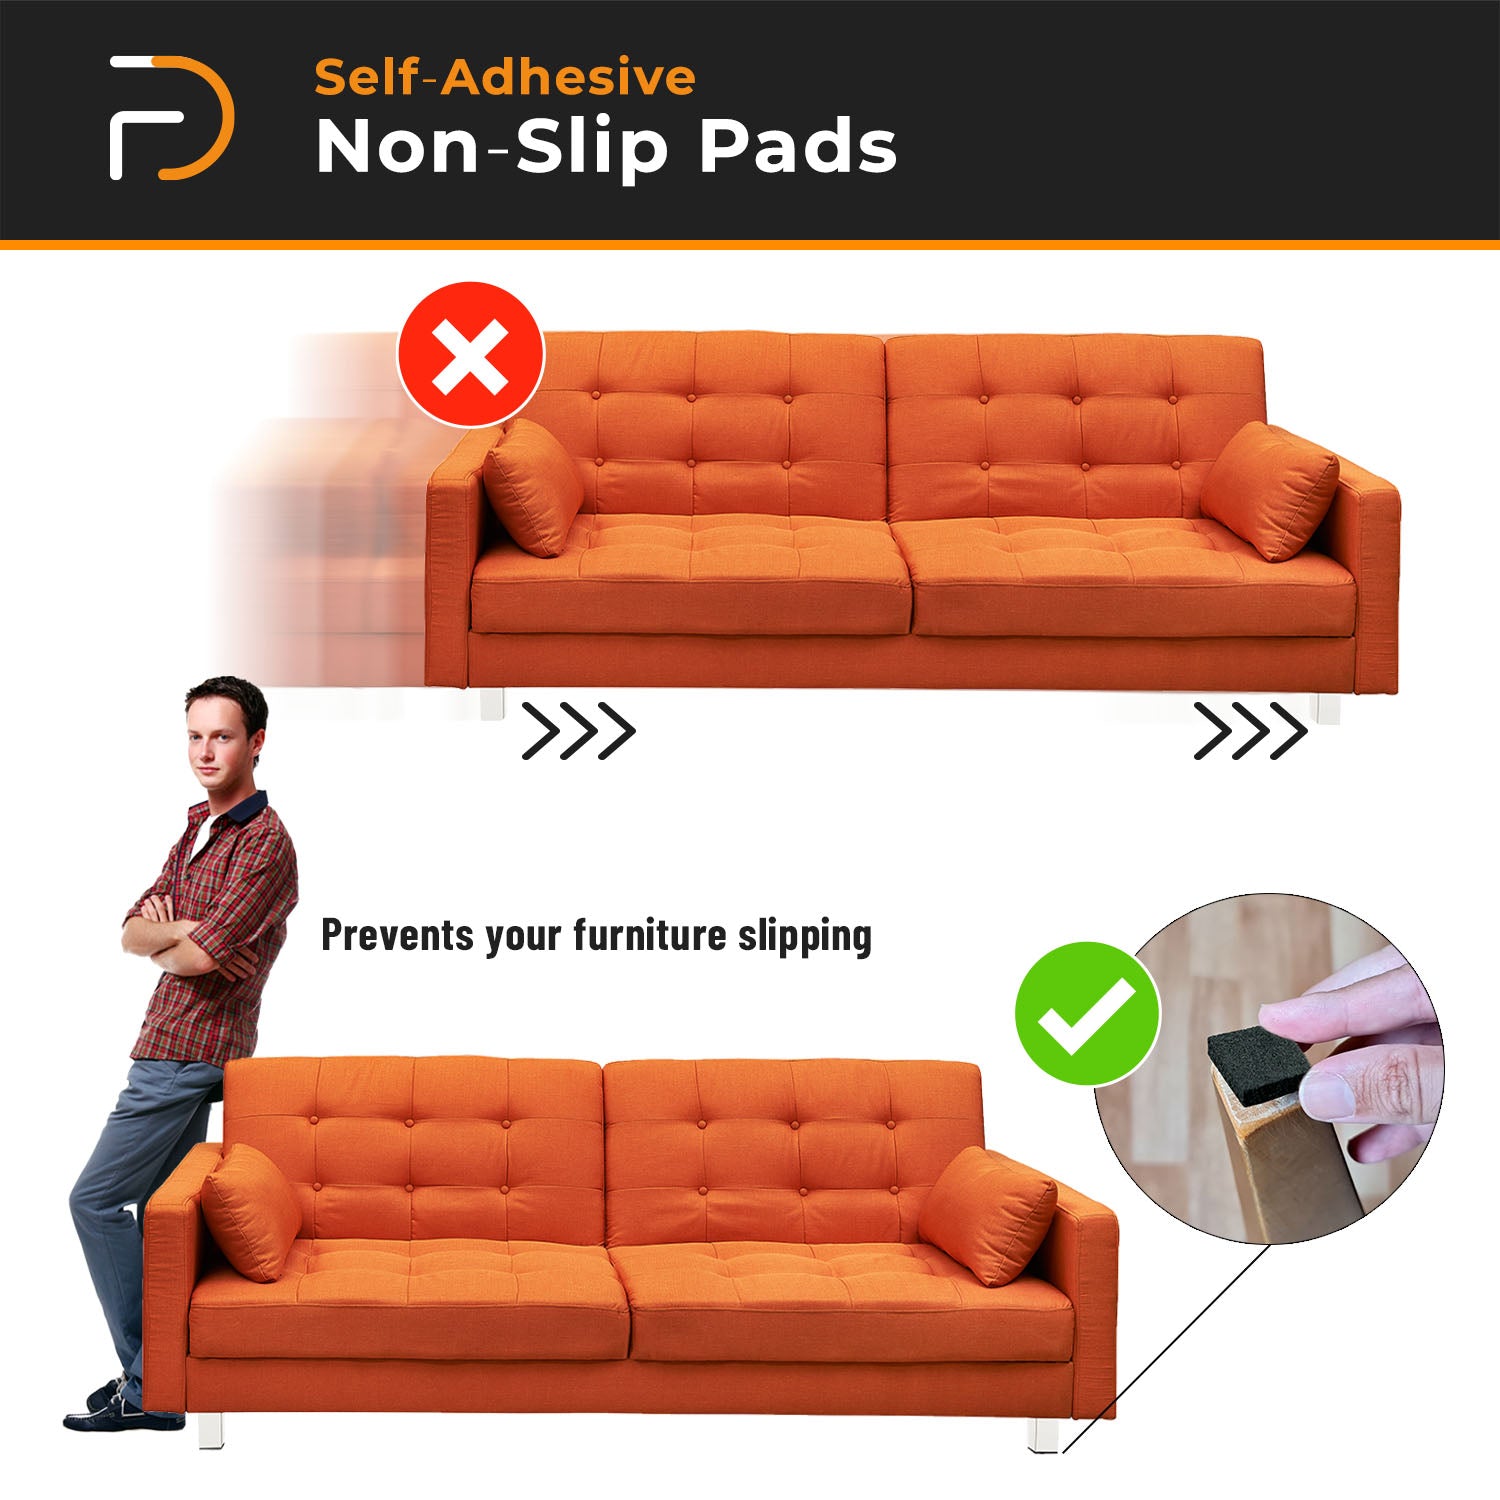 Furndiy Self-Adhesive Non-Slip Eva Pads for Chair & Seat Furniture Feet Pads Hardwood Floor Protection - Noise Stopper (Black)